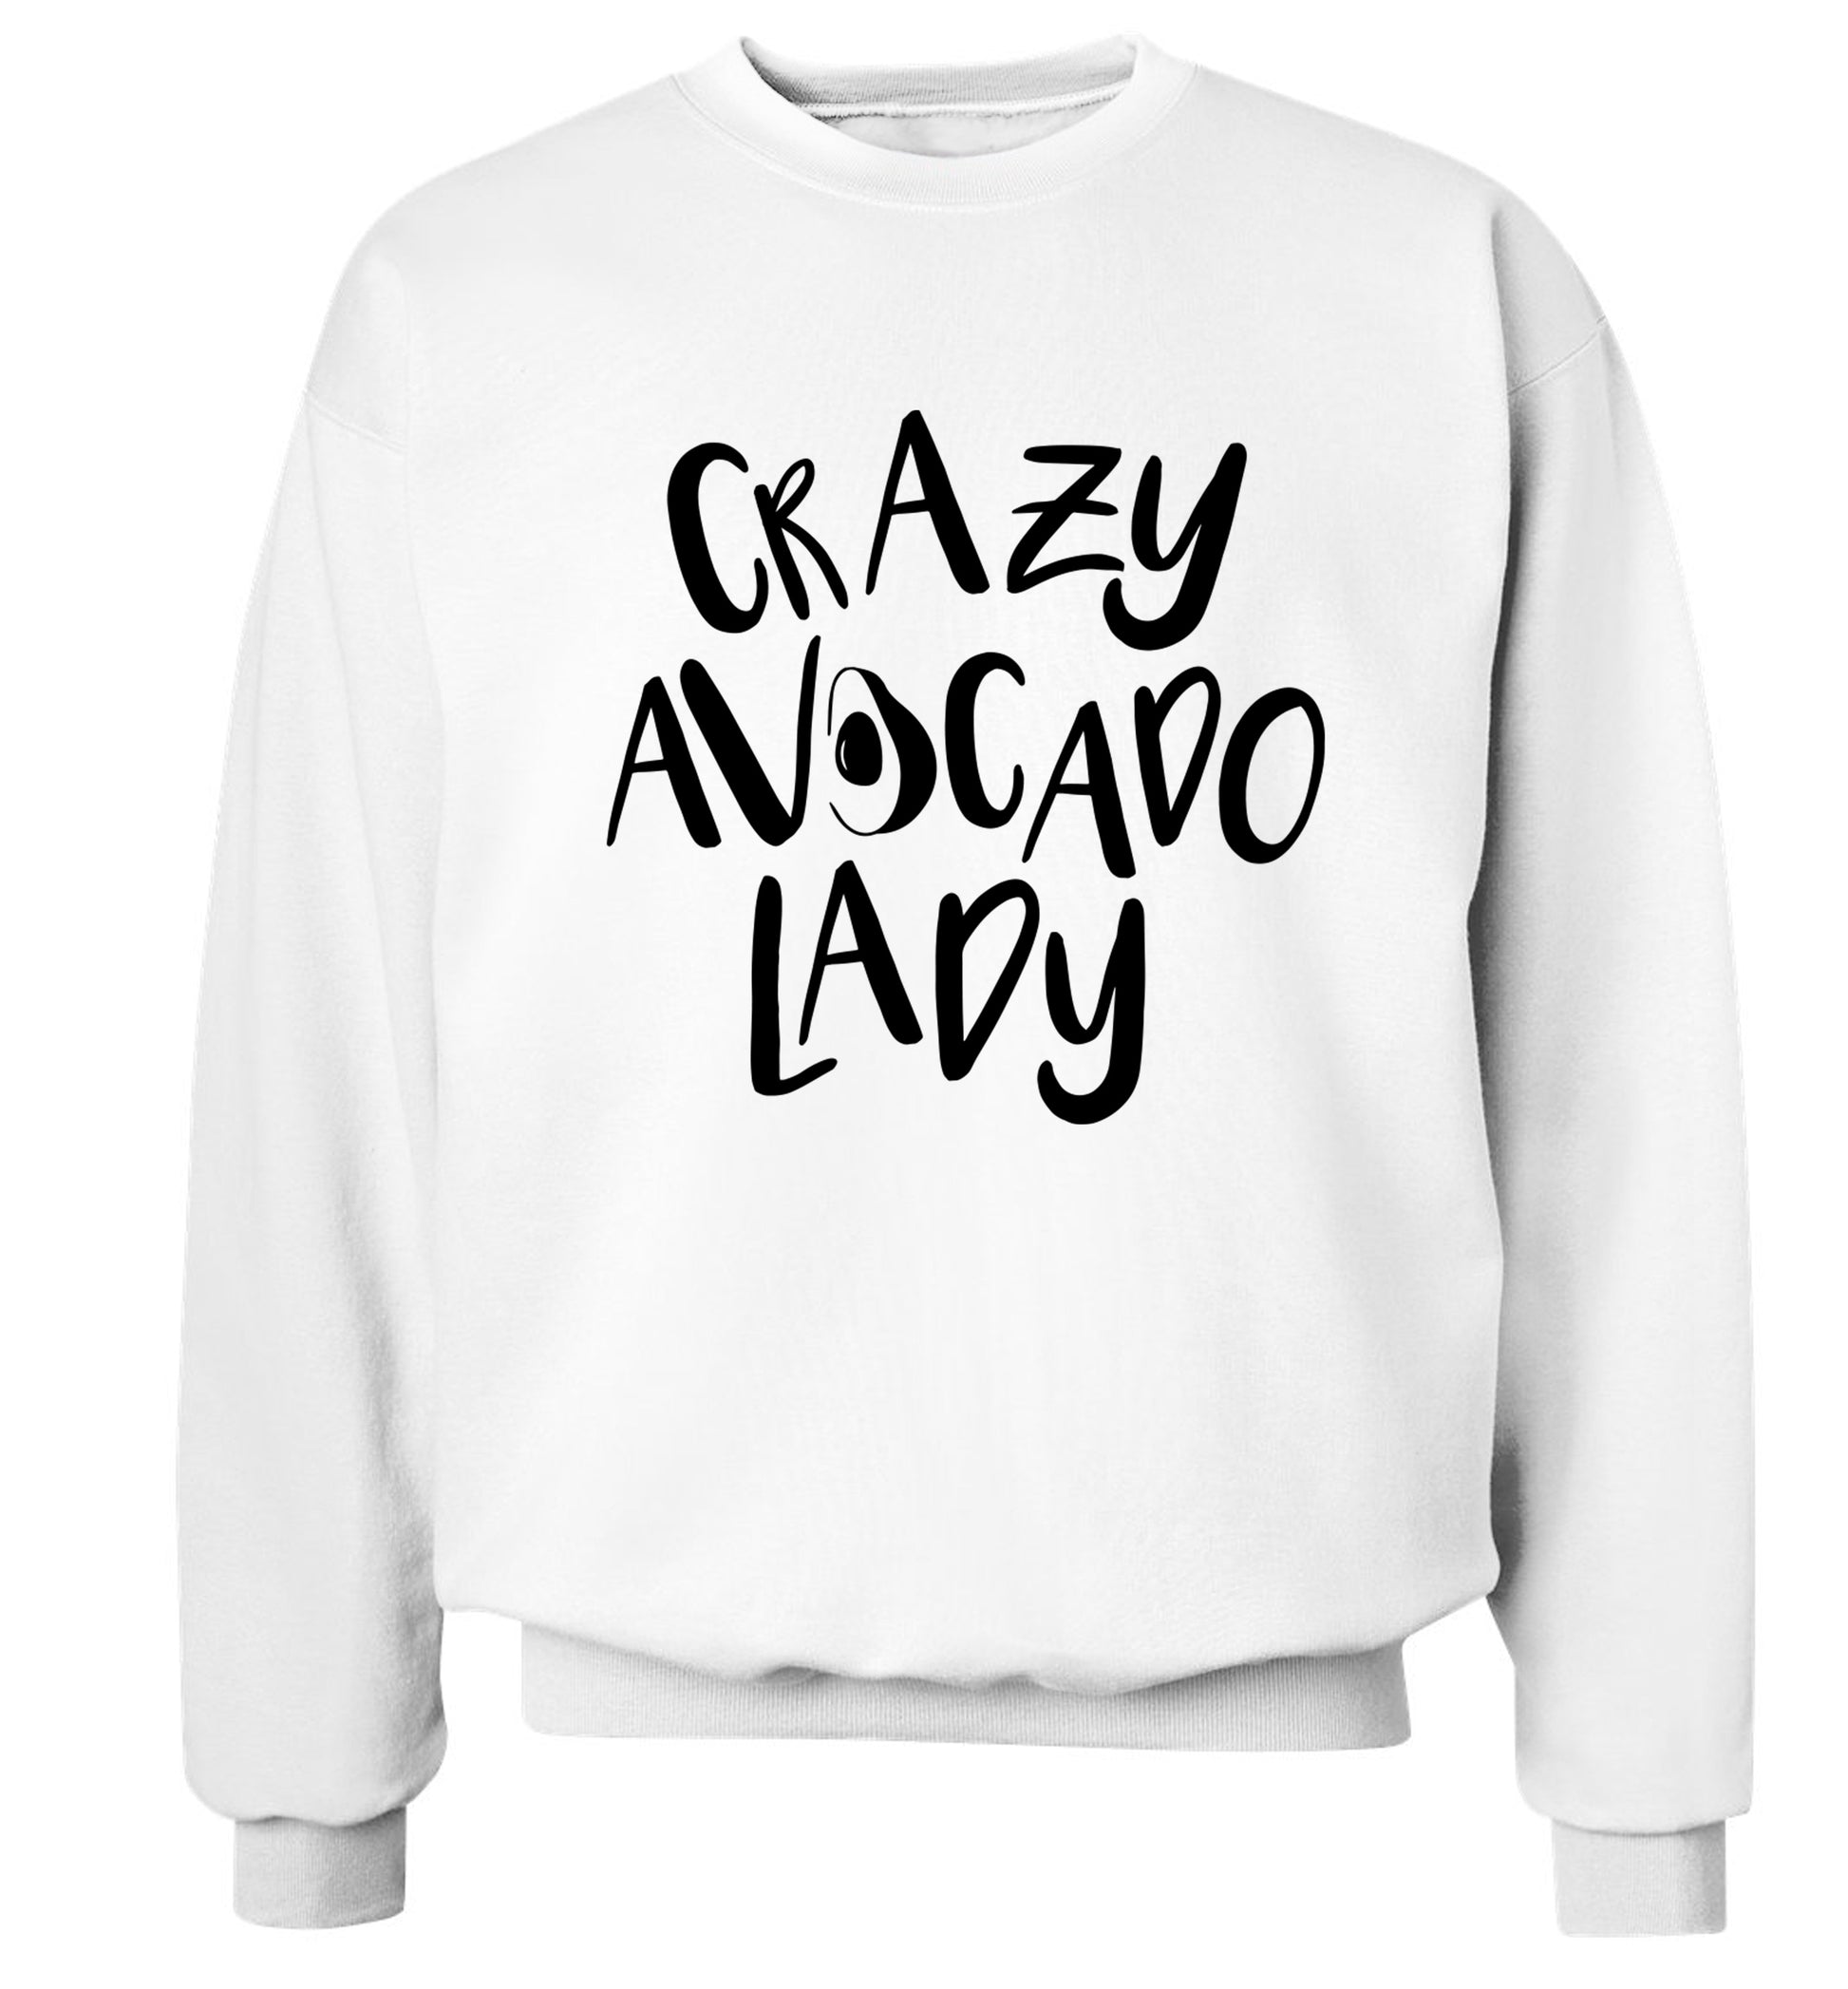 Crazy avocado lady Adult's unisex white Sweater 2XL